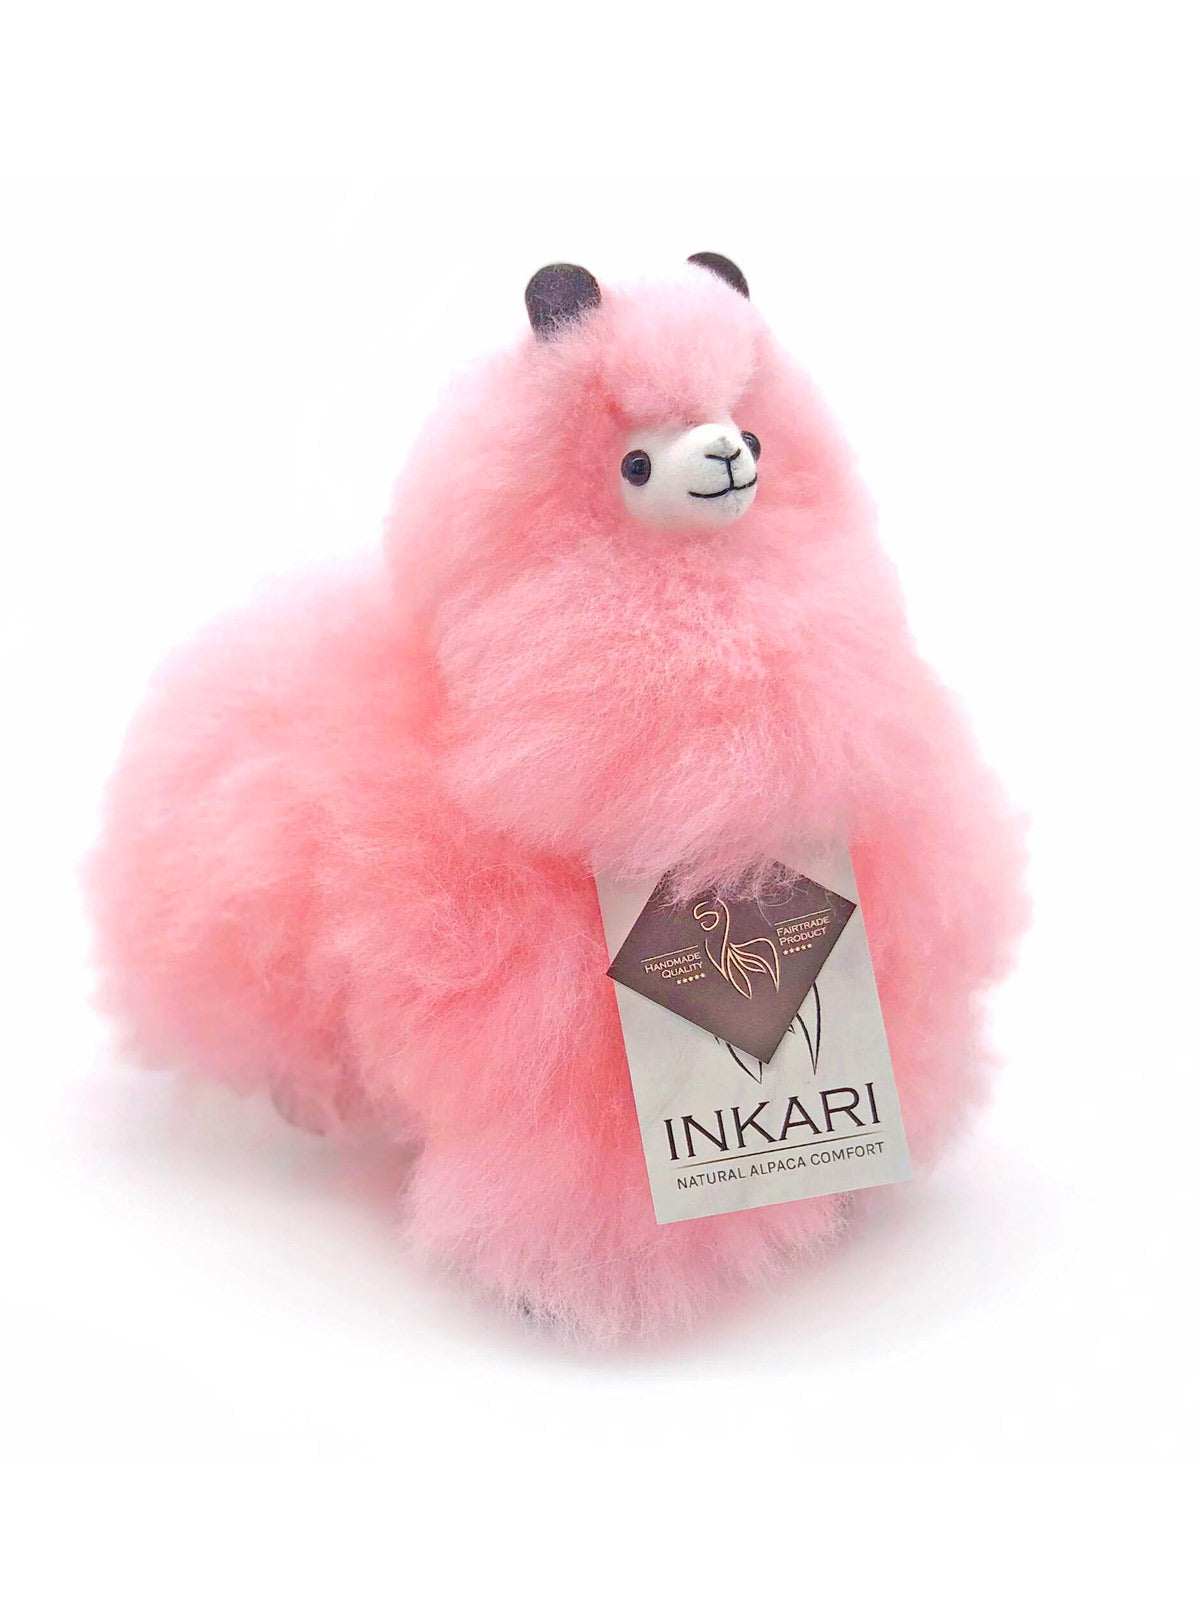 Inkari Alpaca- Μαλακό παιχνίδι -Rainbows-COTTON CANDY-Small 23cm